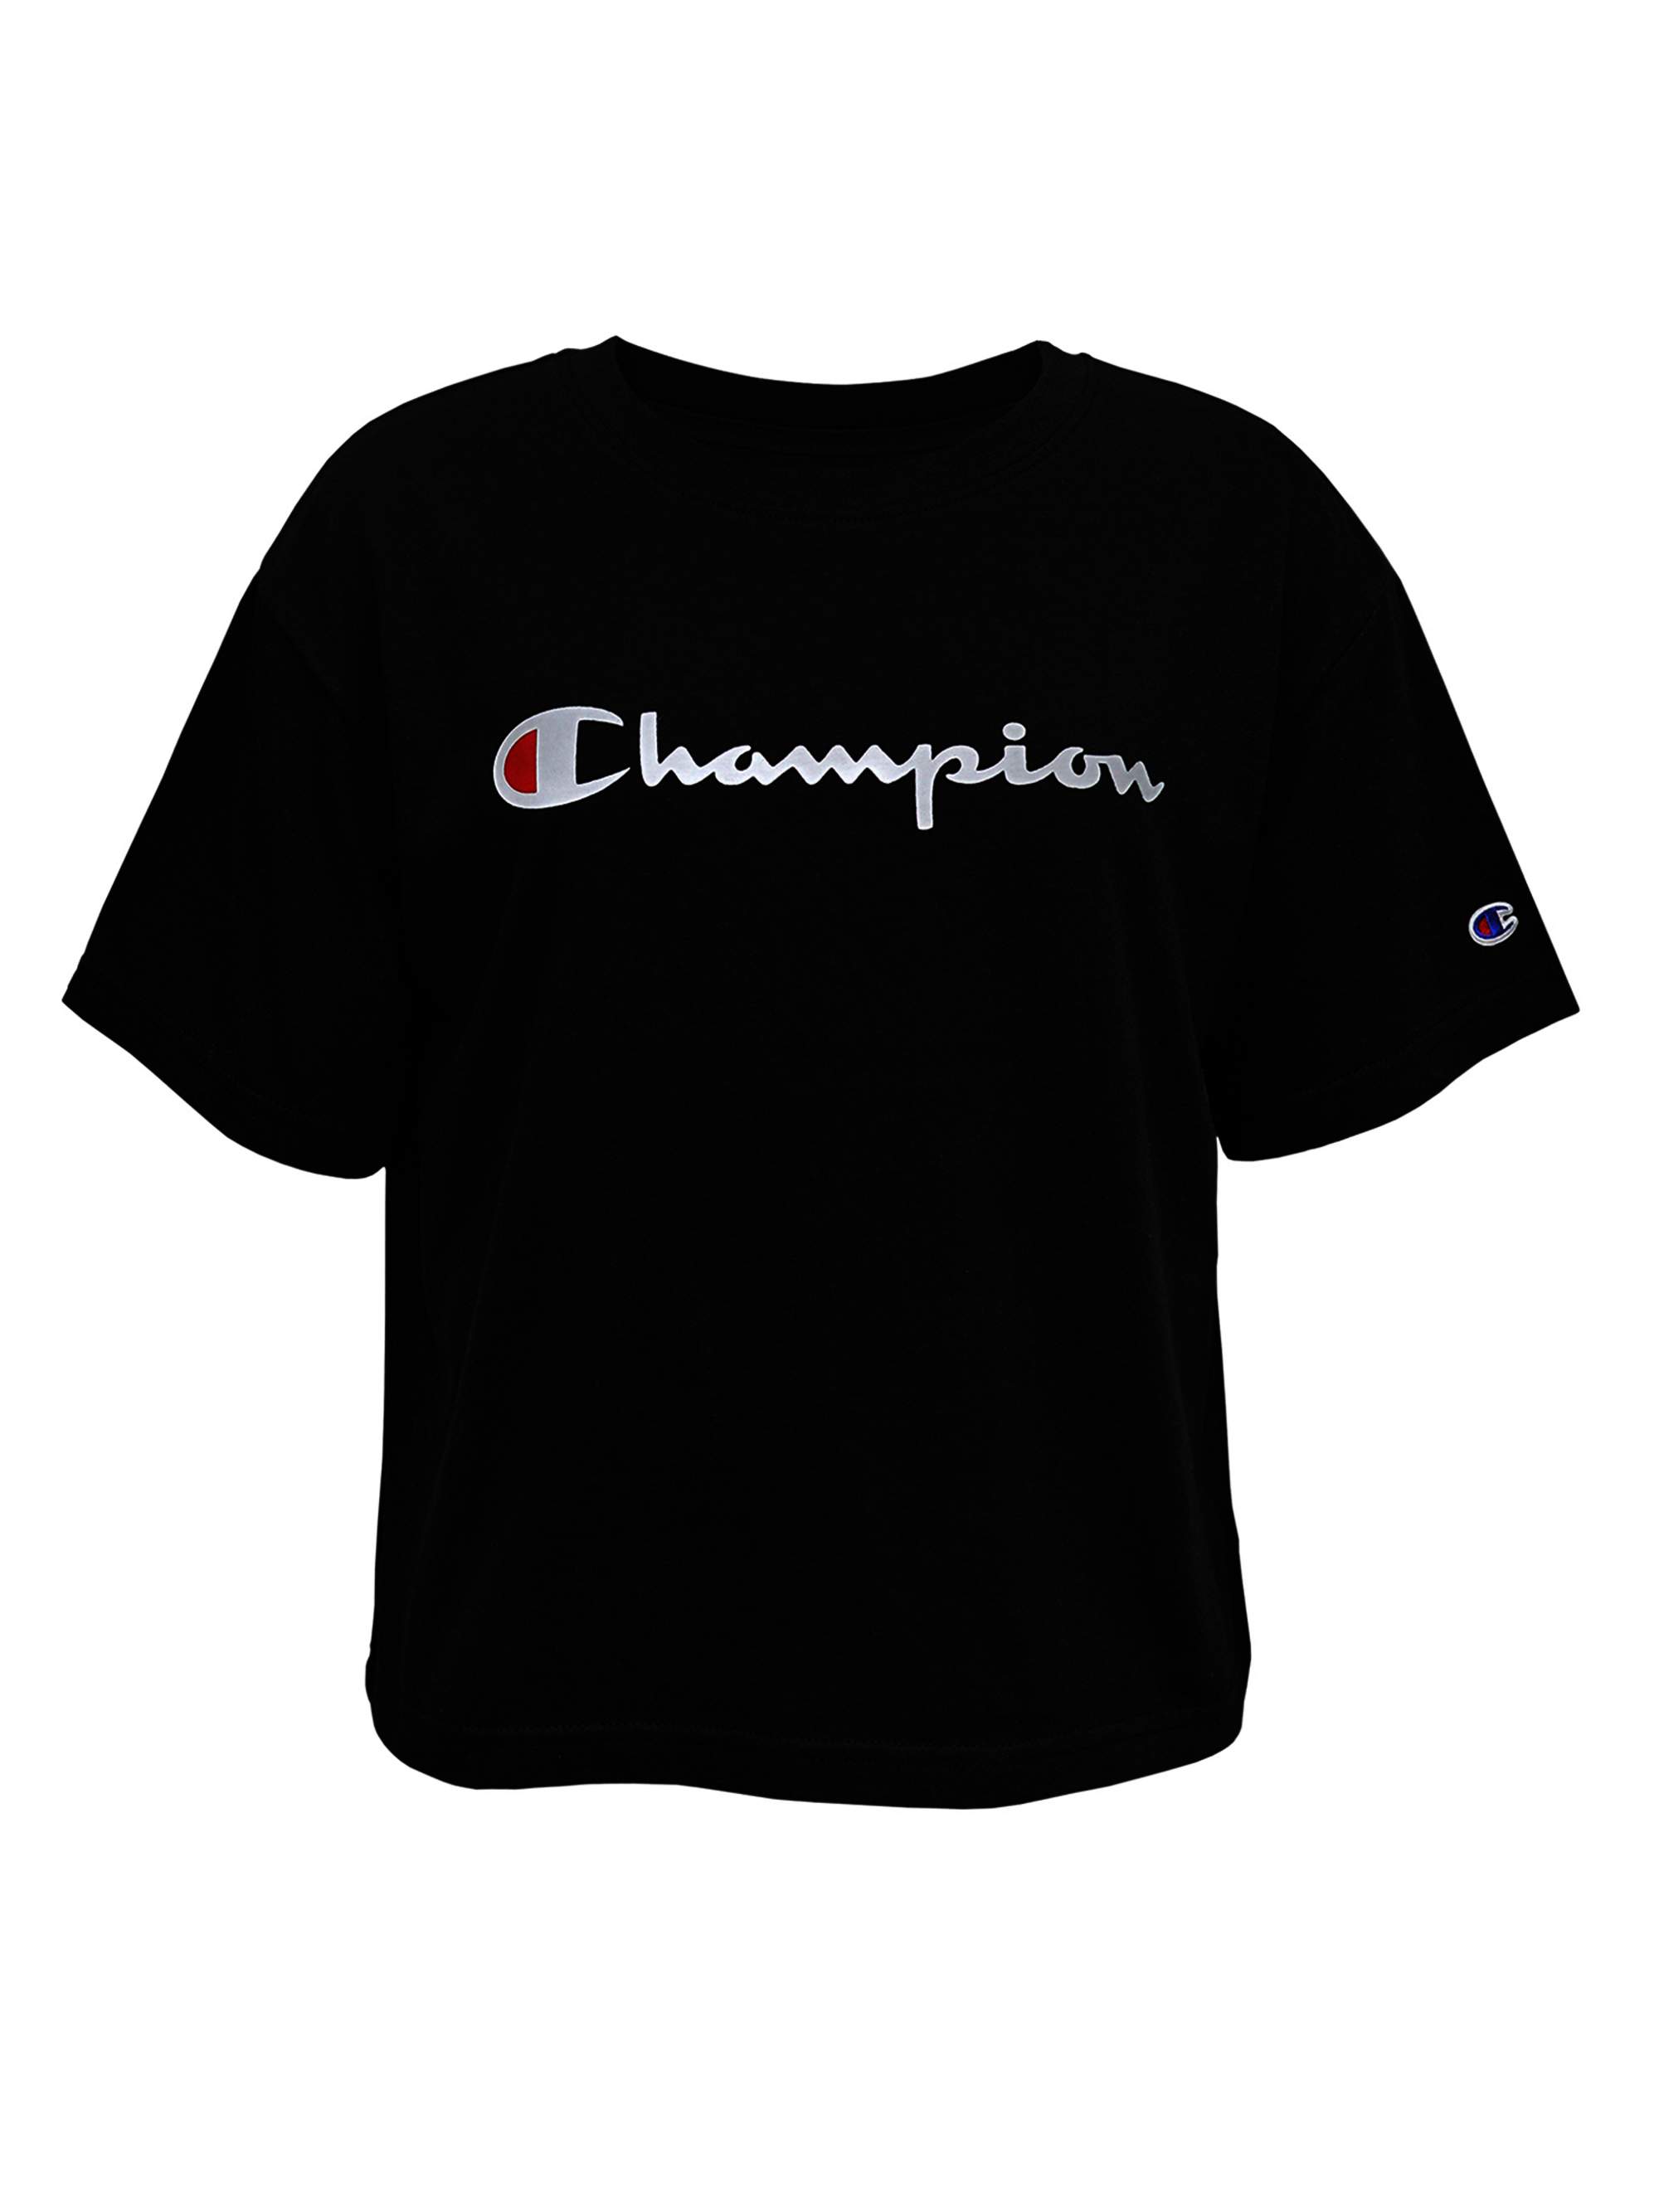 Champion Girls Classic Logo Graphic Active Boxy Graphic T-Shirt, Sizes 7-16 - image 1 of 1